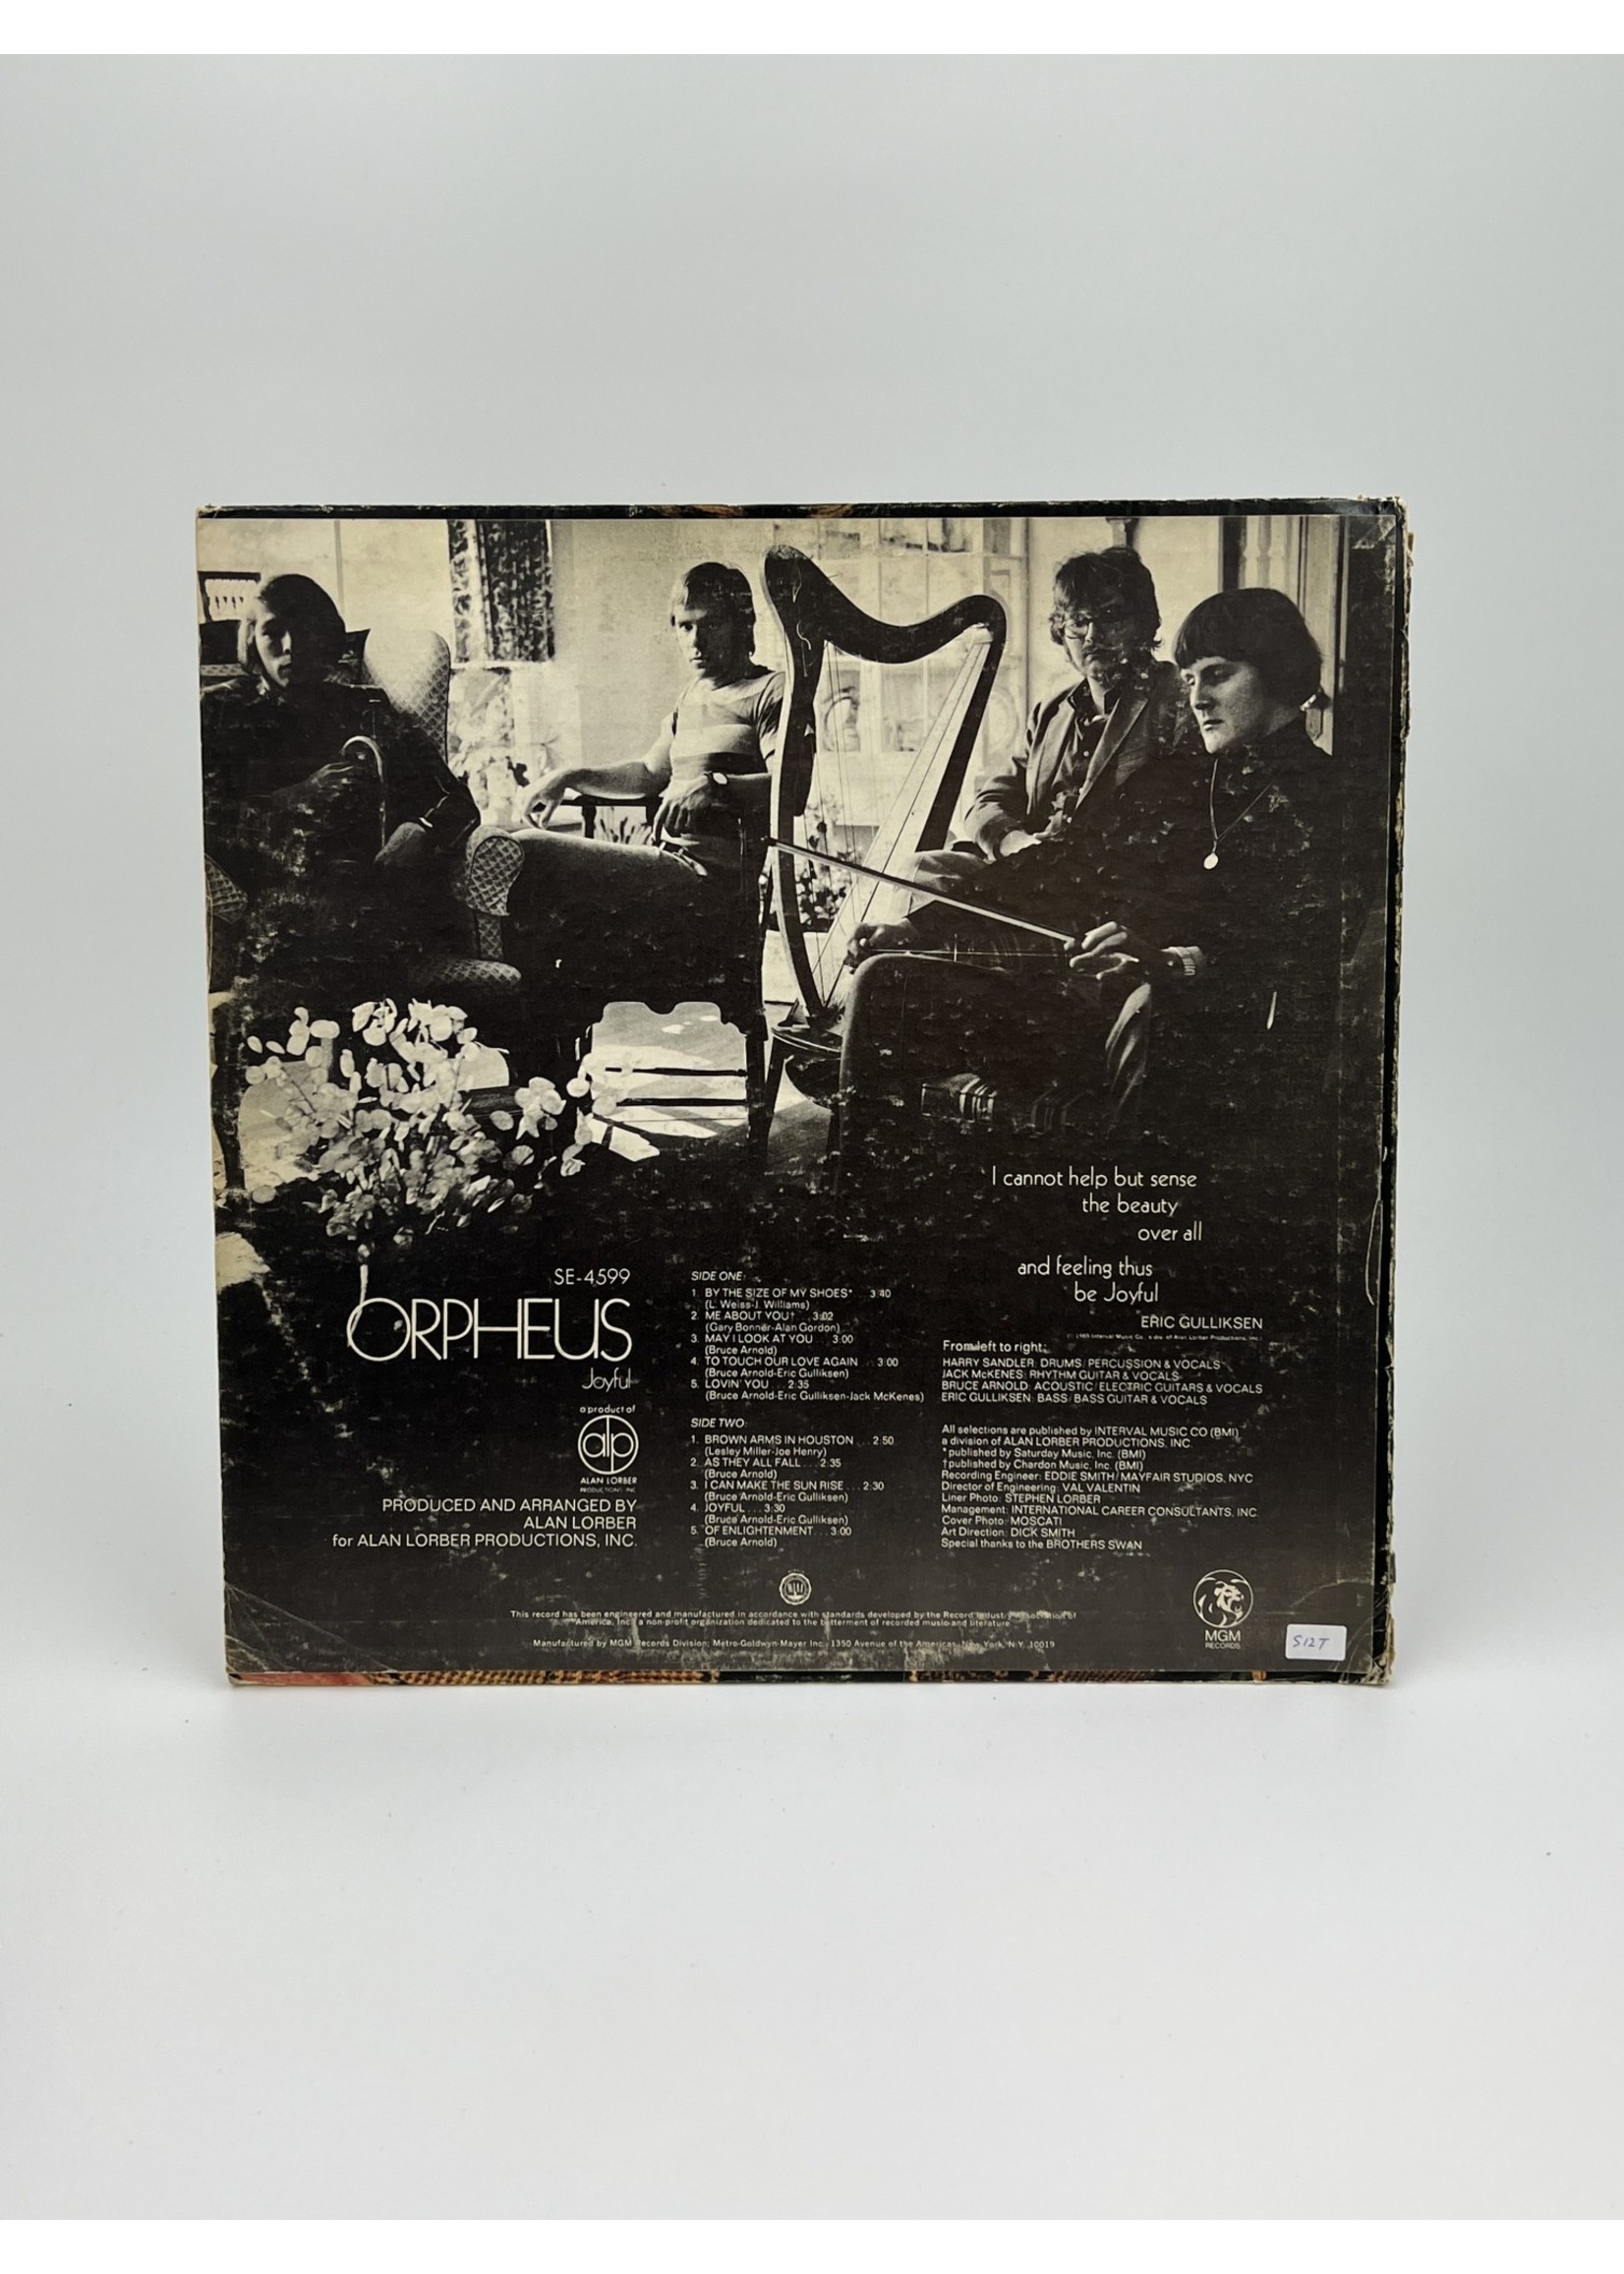 LP Orpheus Joyful LP Record